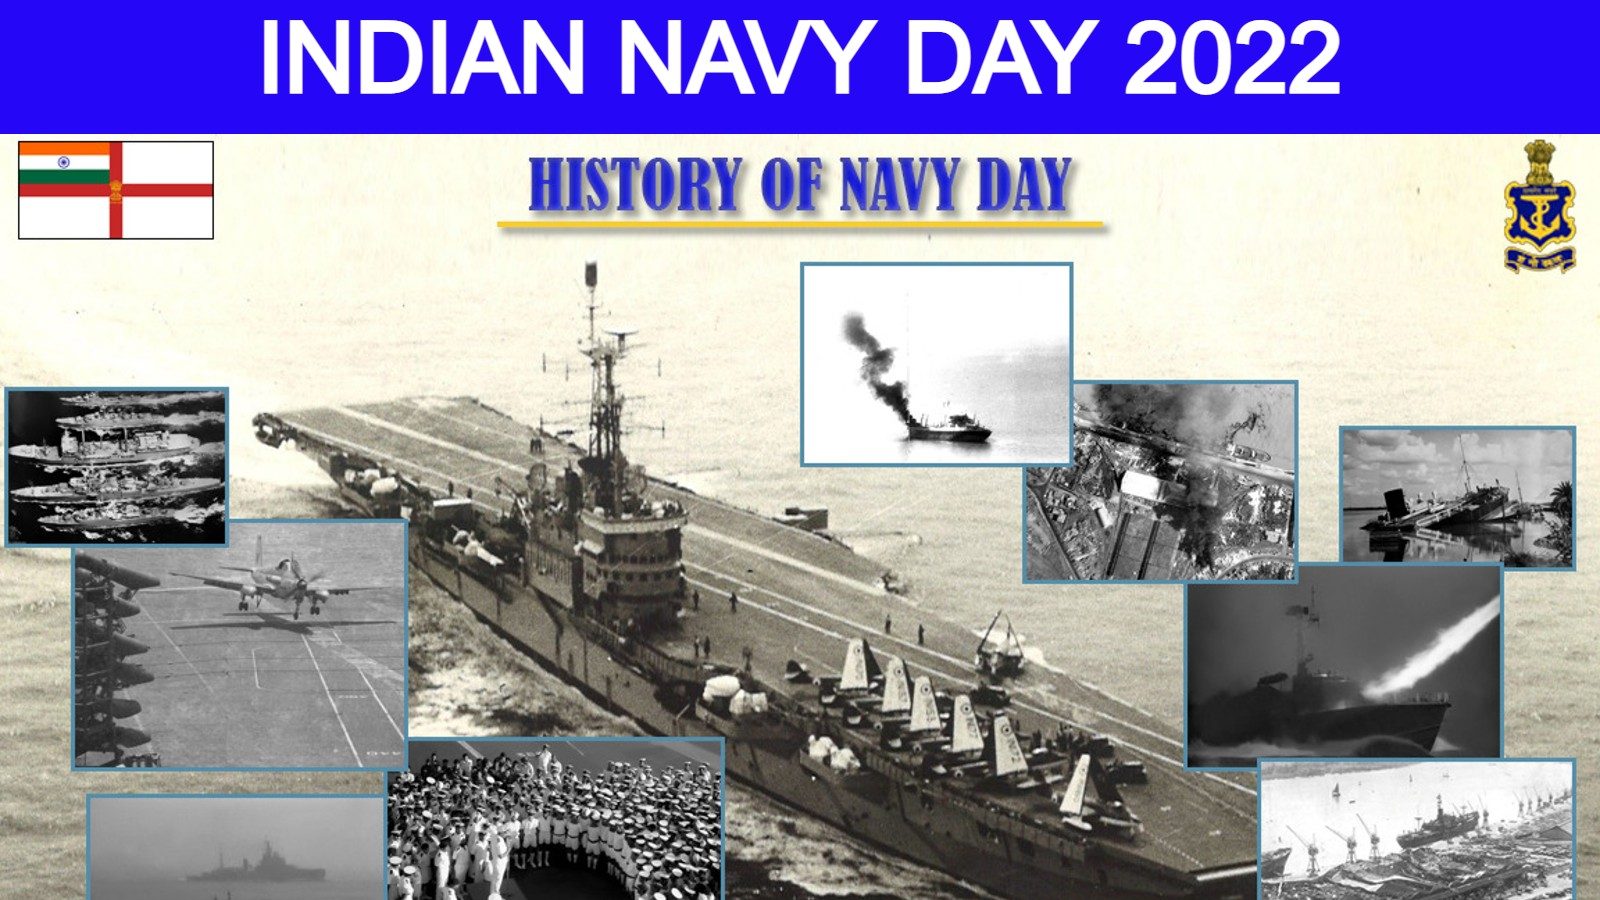 Indian Navy Day 2022: A Look at Indian Navy's Killer Warships